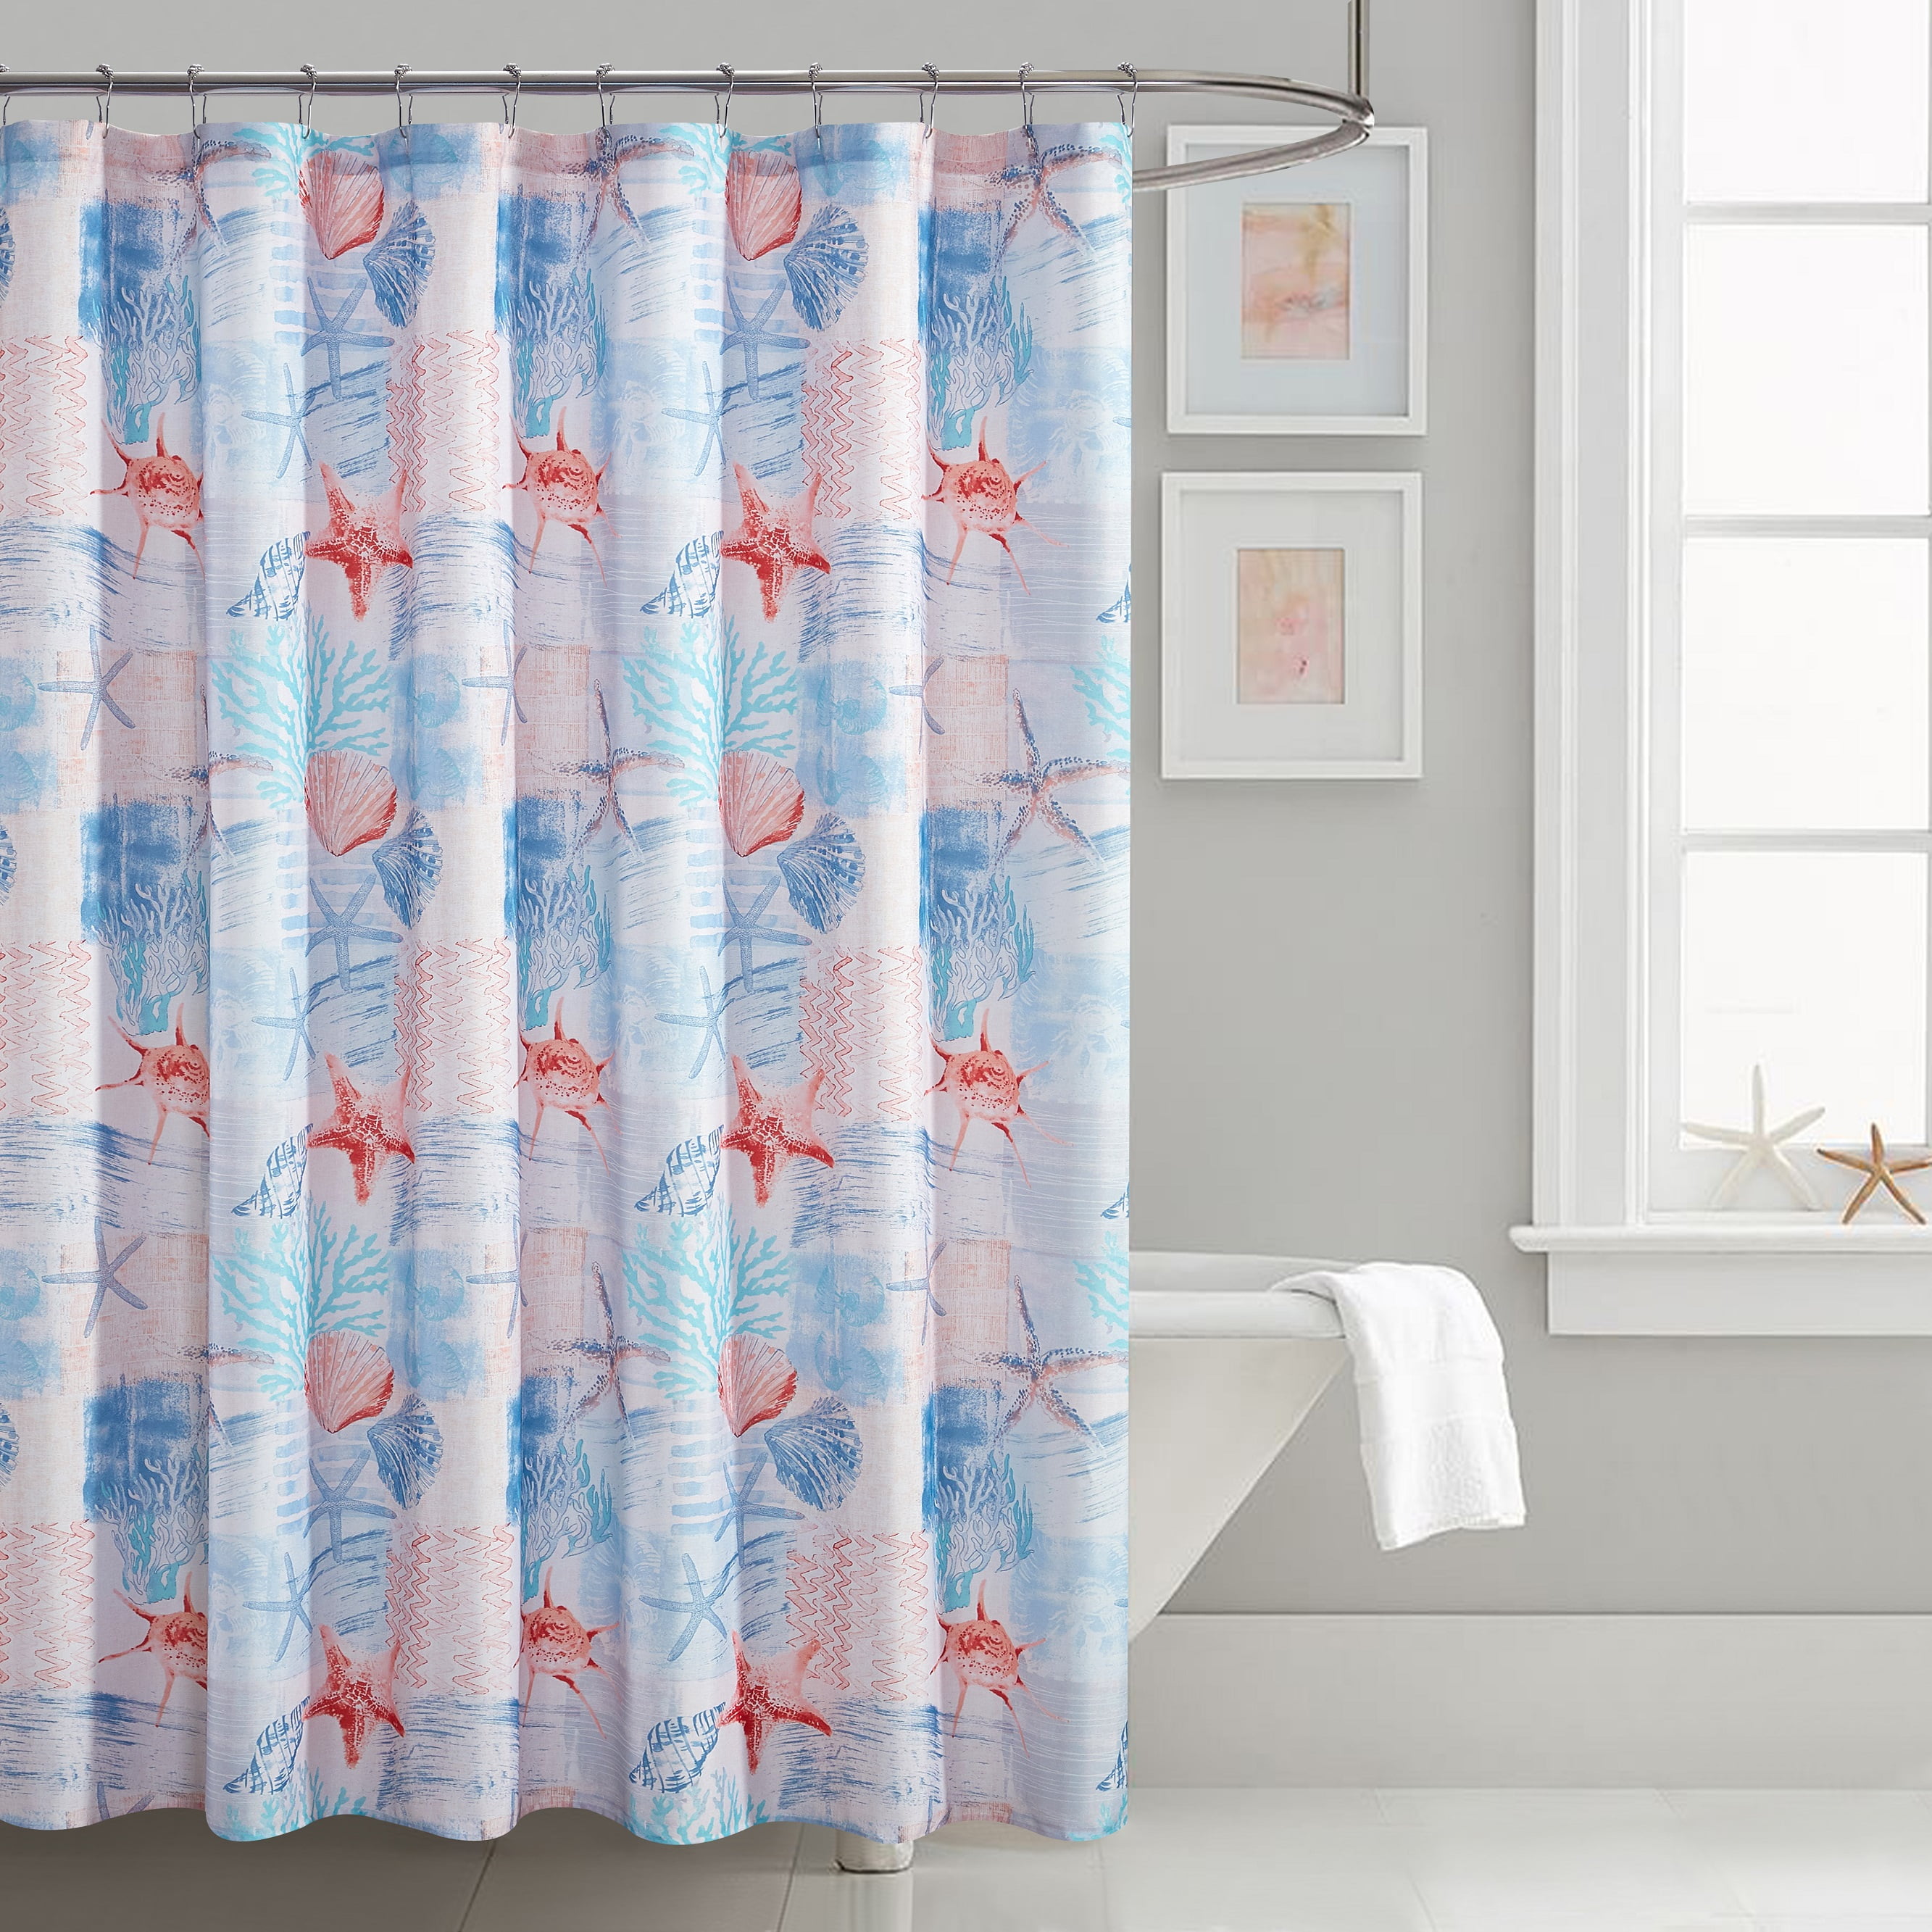 Fabric Shower Curtain, Star Wars Shower Curtain Kohl S